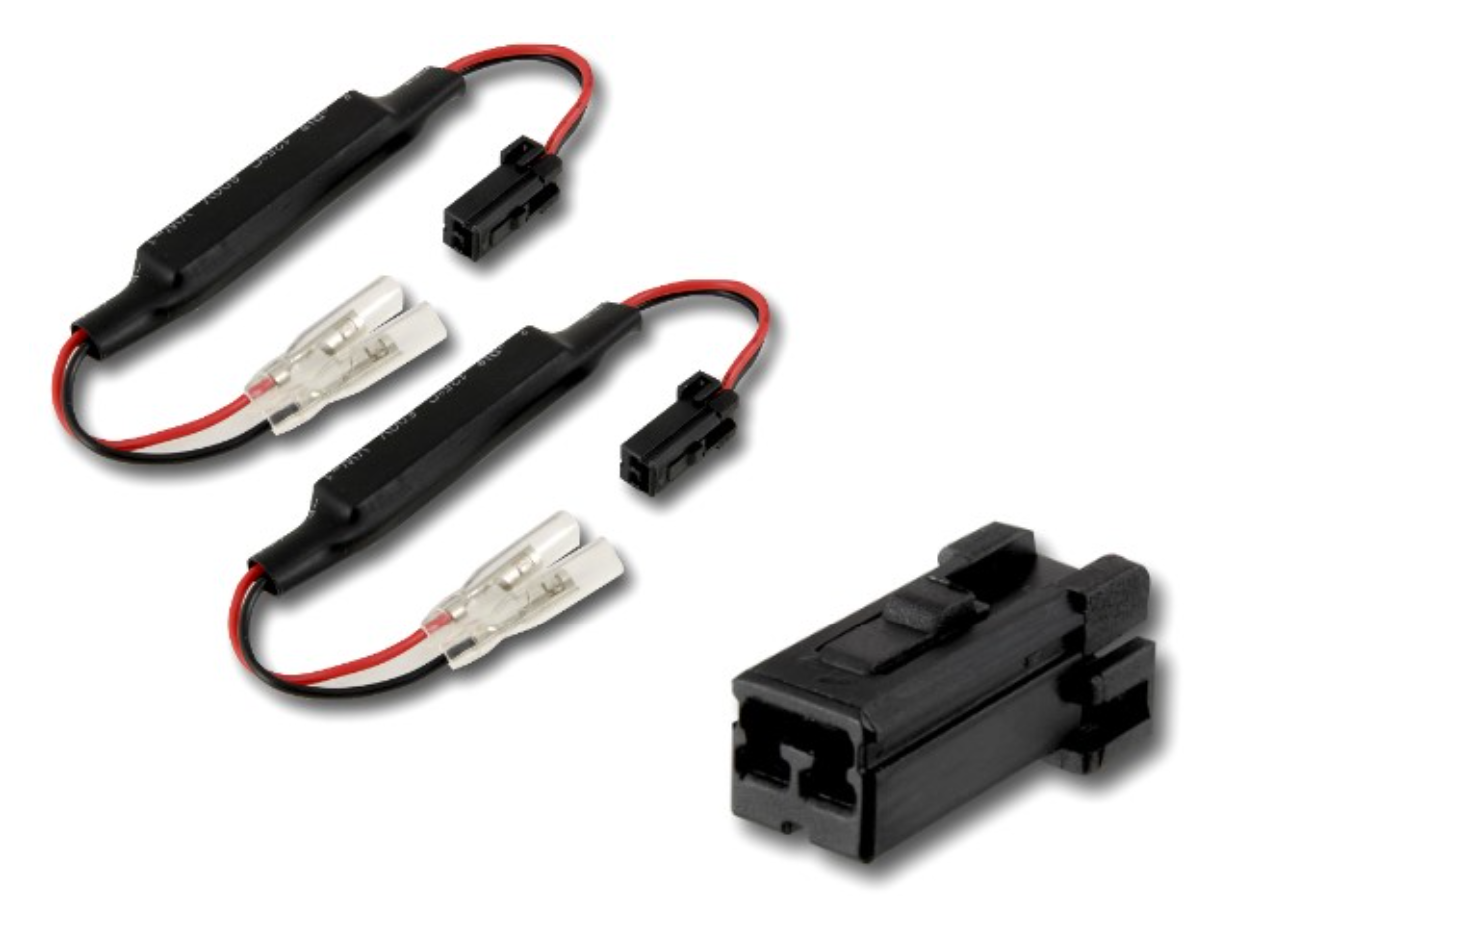 Adapter Kabel mit Widerstand LED Blinker für Harley Davidson Modelle 10W 20Ohm